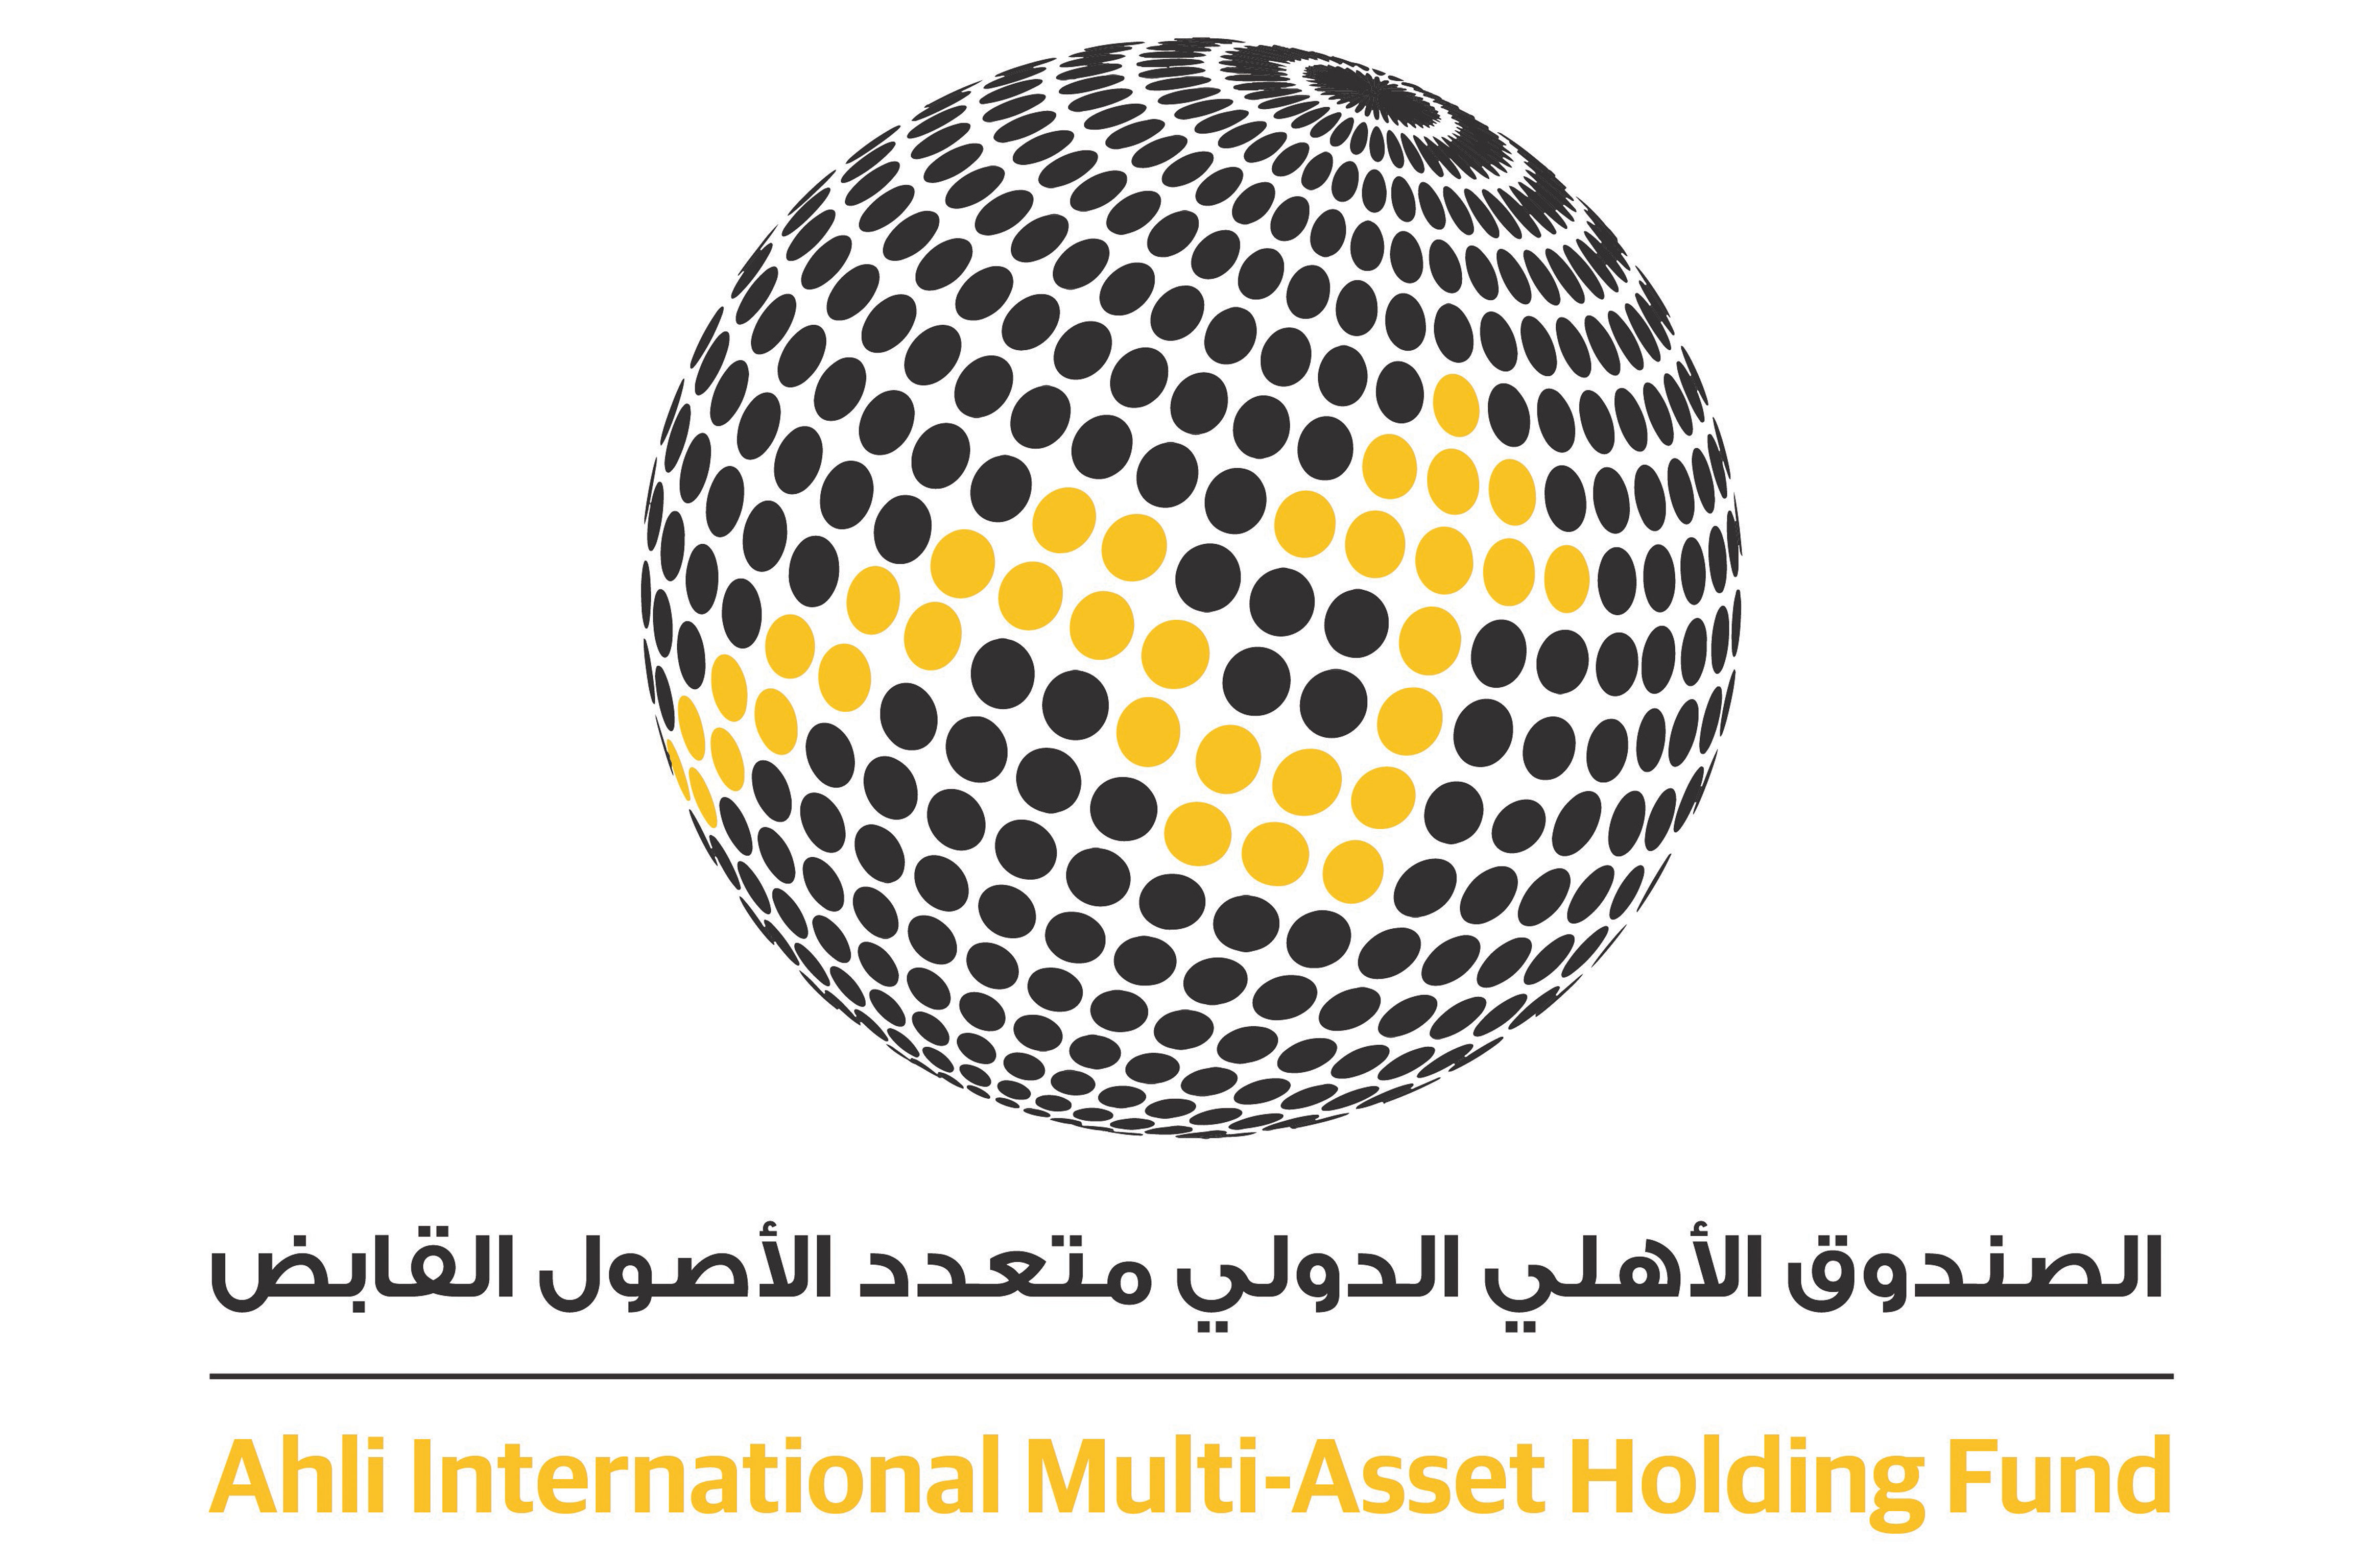 Bonus Share Distribution Announcement for Ahli International Multi-Asset Holding Fund Unit Holders